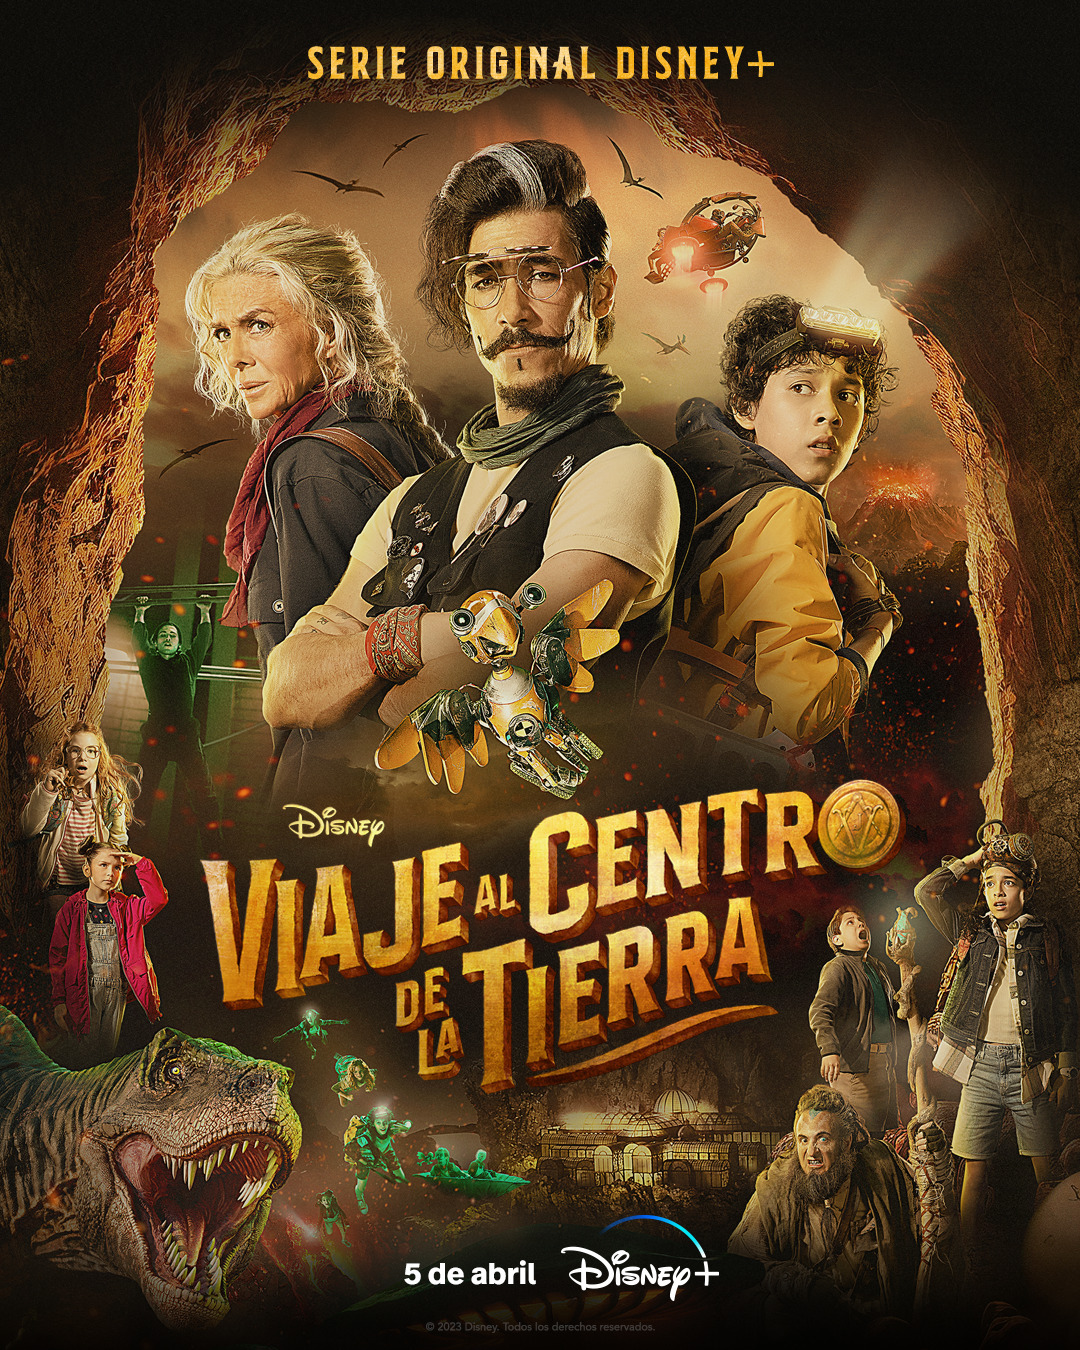 Extra Large TV Poster Image for Viaje al centro de la tierra (#2 of 8)